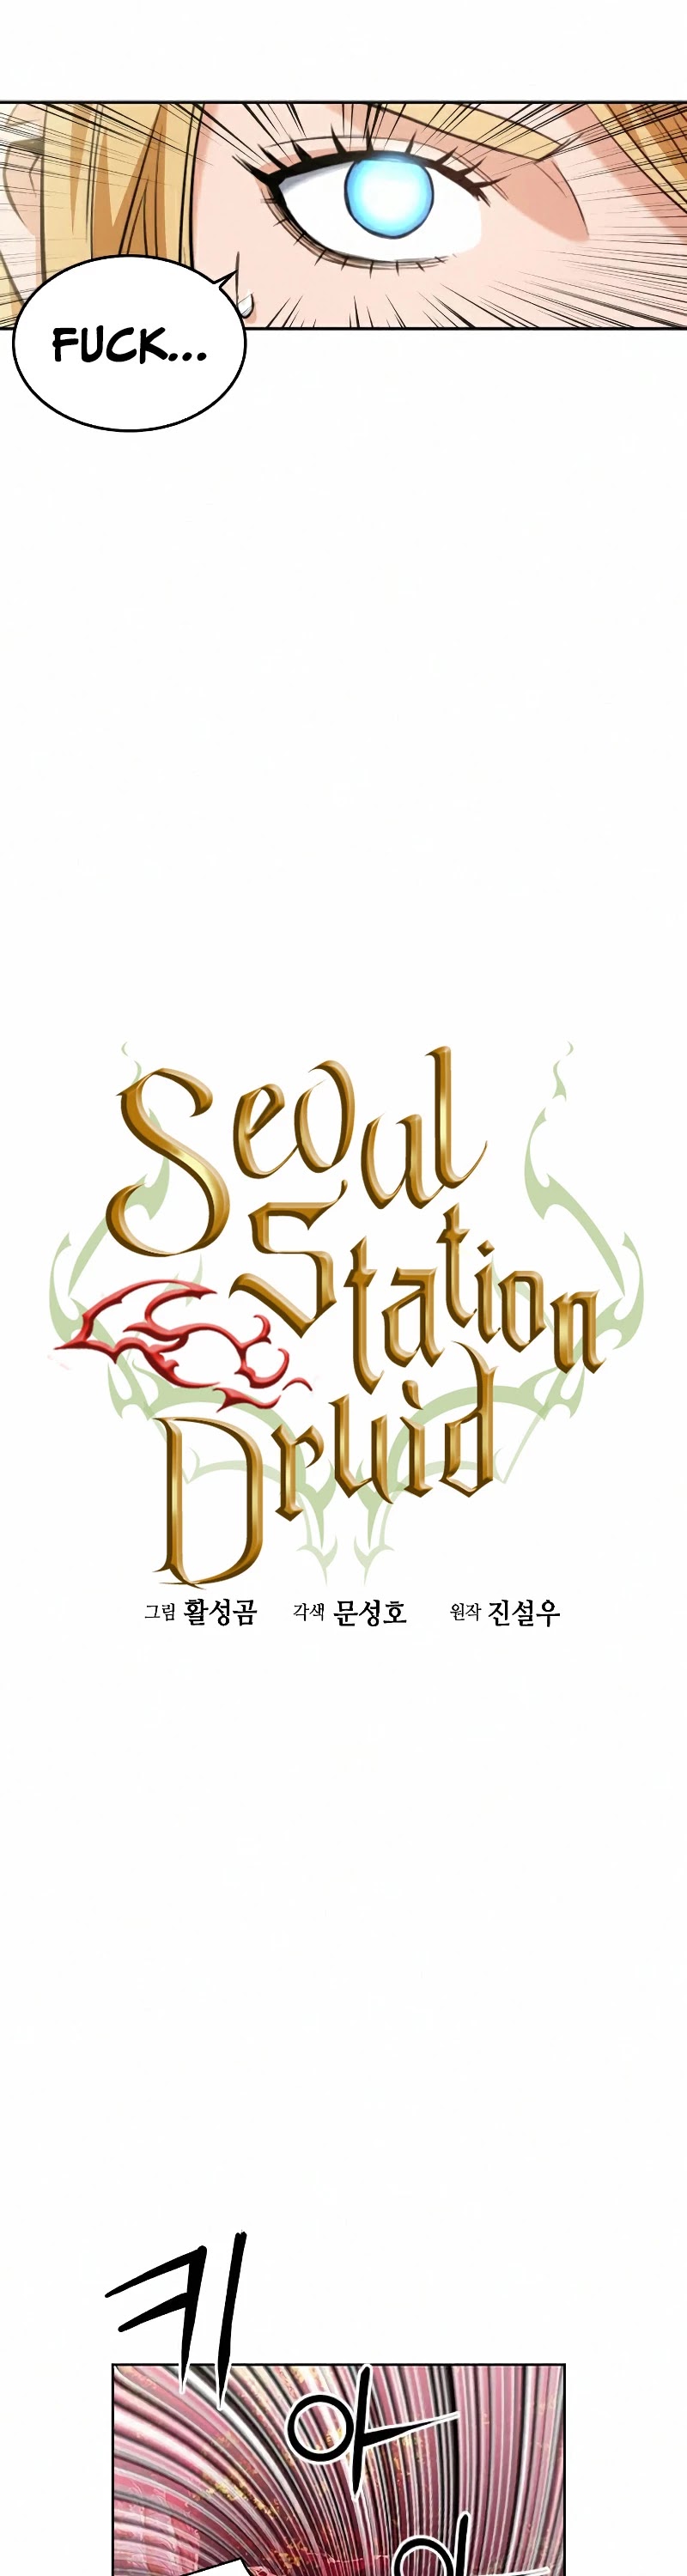 Seoul Station Druid chapter 26